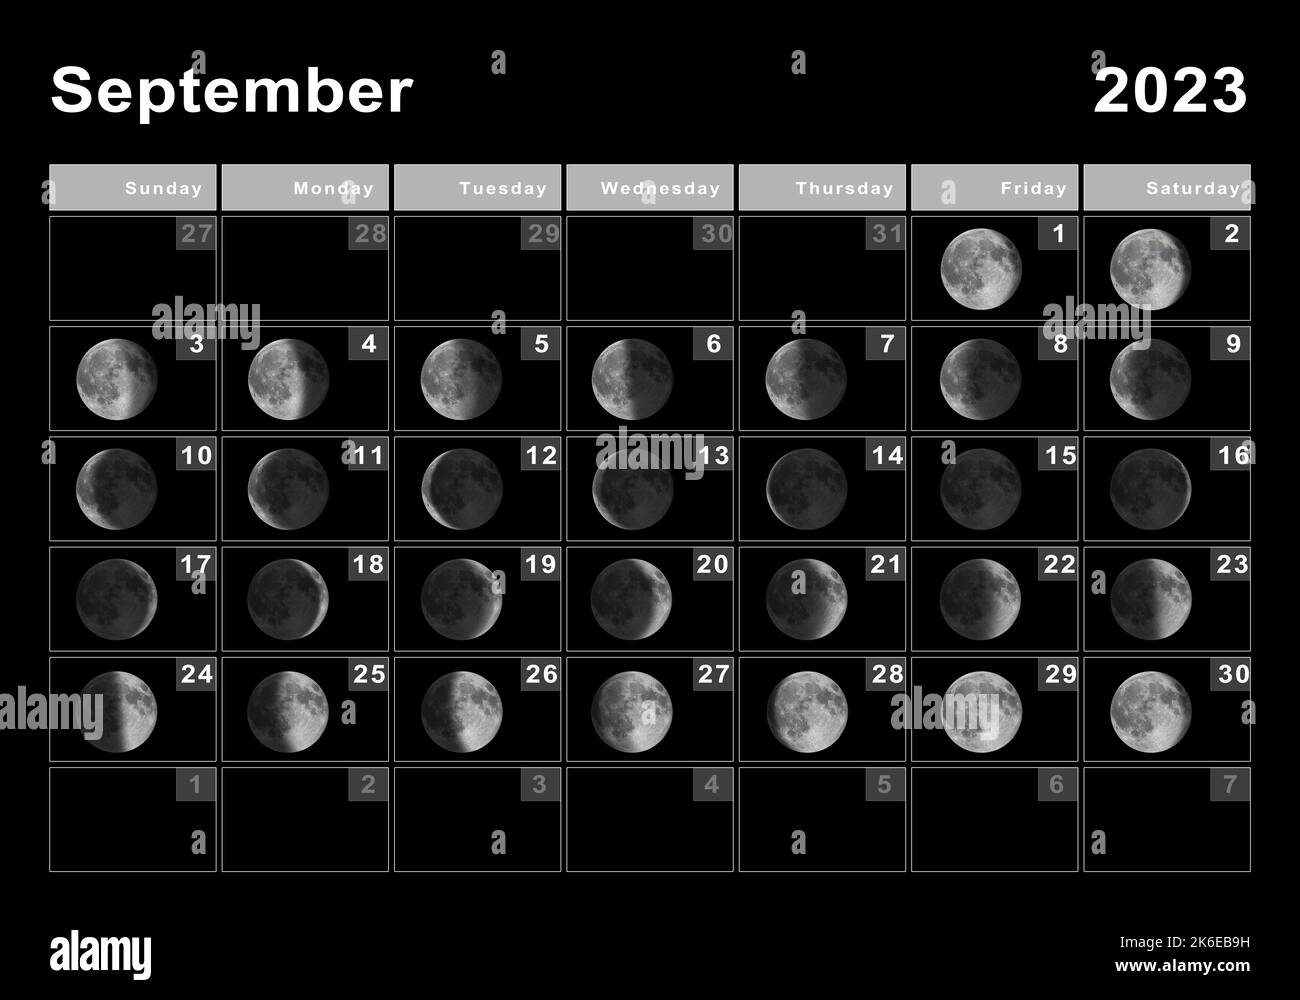 September 2023 Lunar calendar, Moon cycles, Moon Phases Stock Photo Alamy